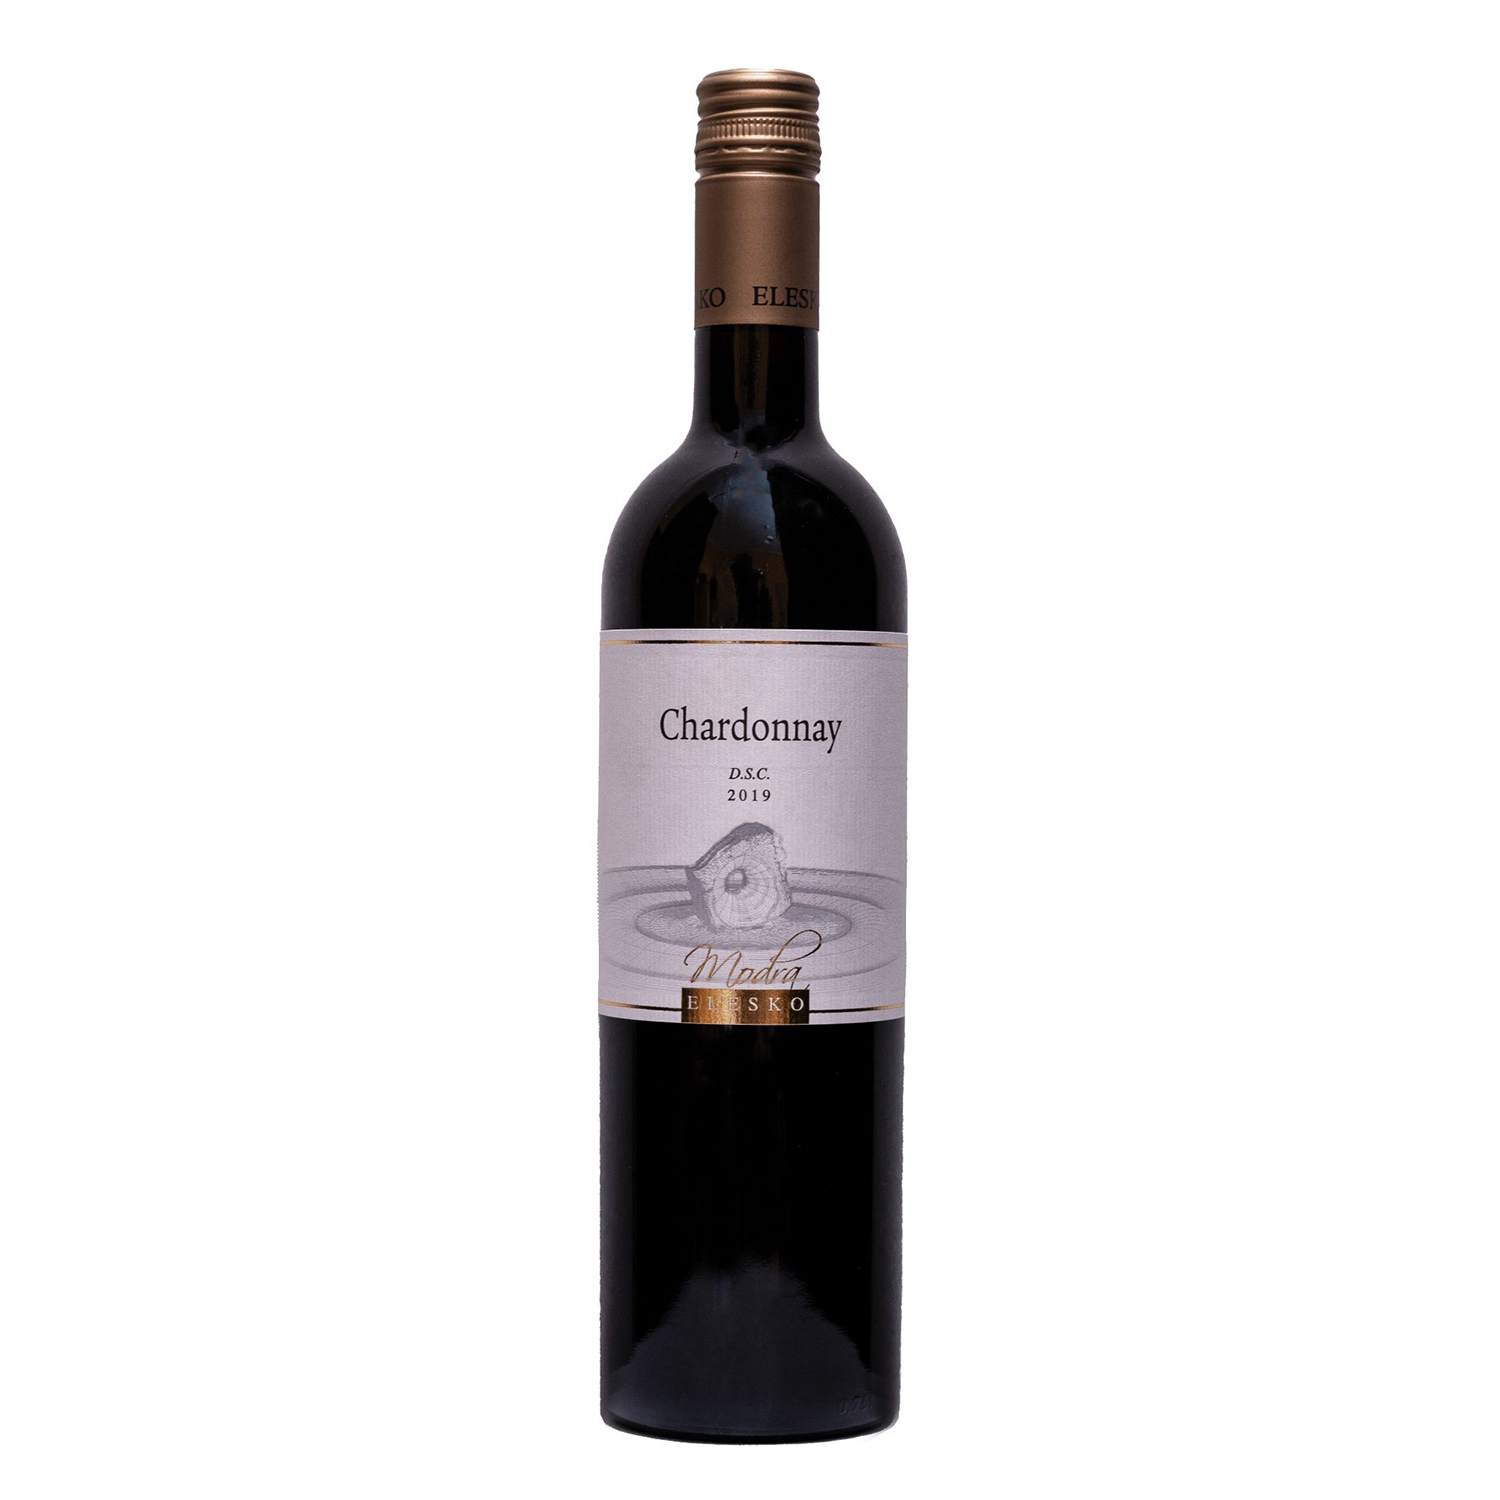 Elesko Chardonnay 2019 D.S.C. 13,5% 0,75L